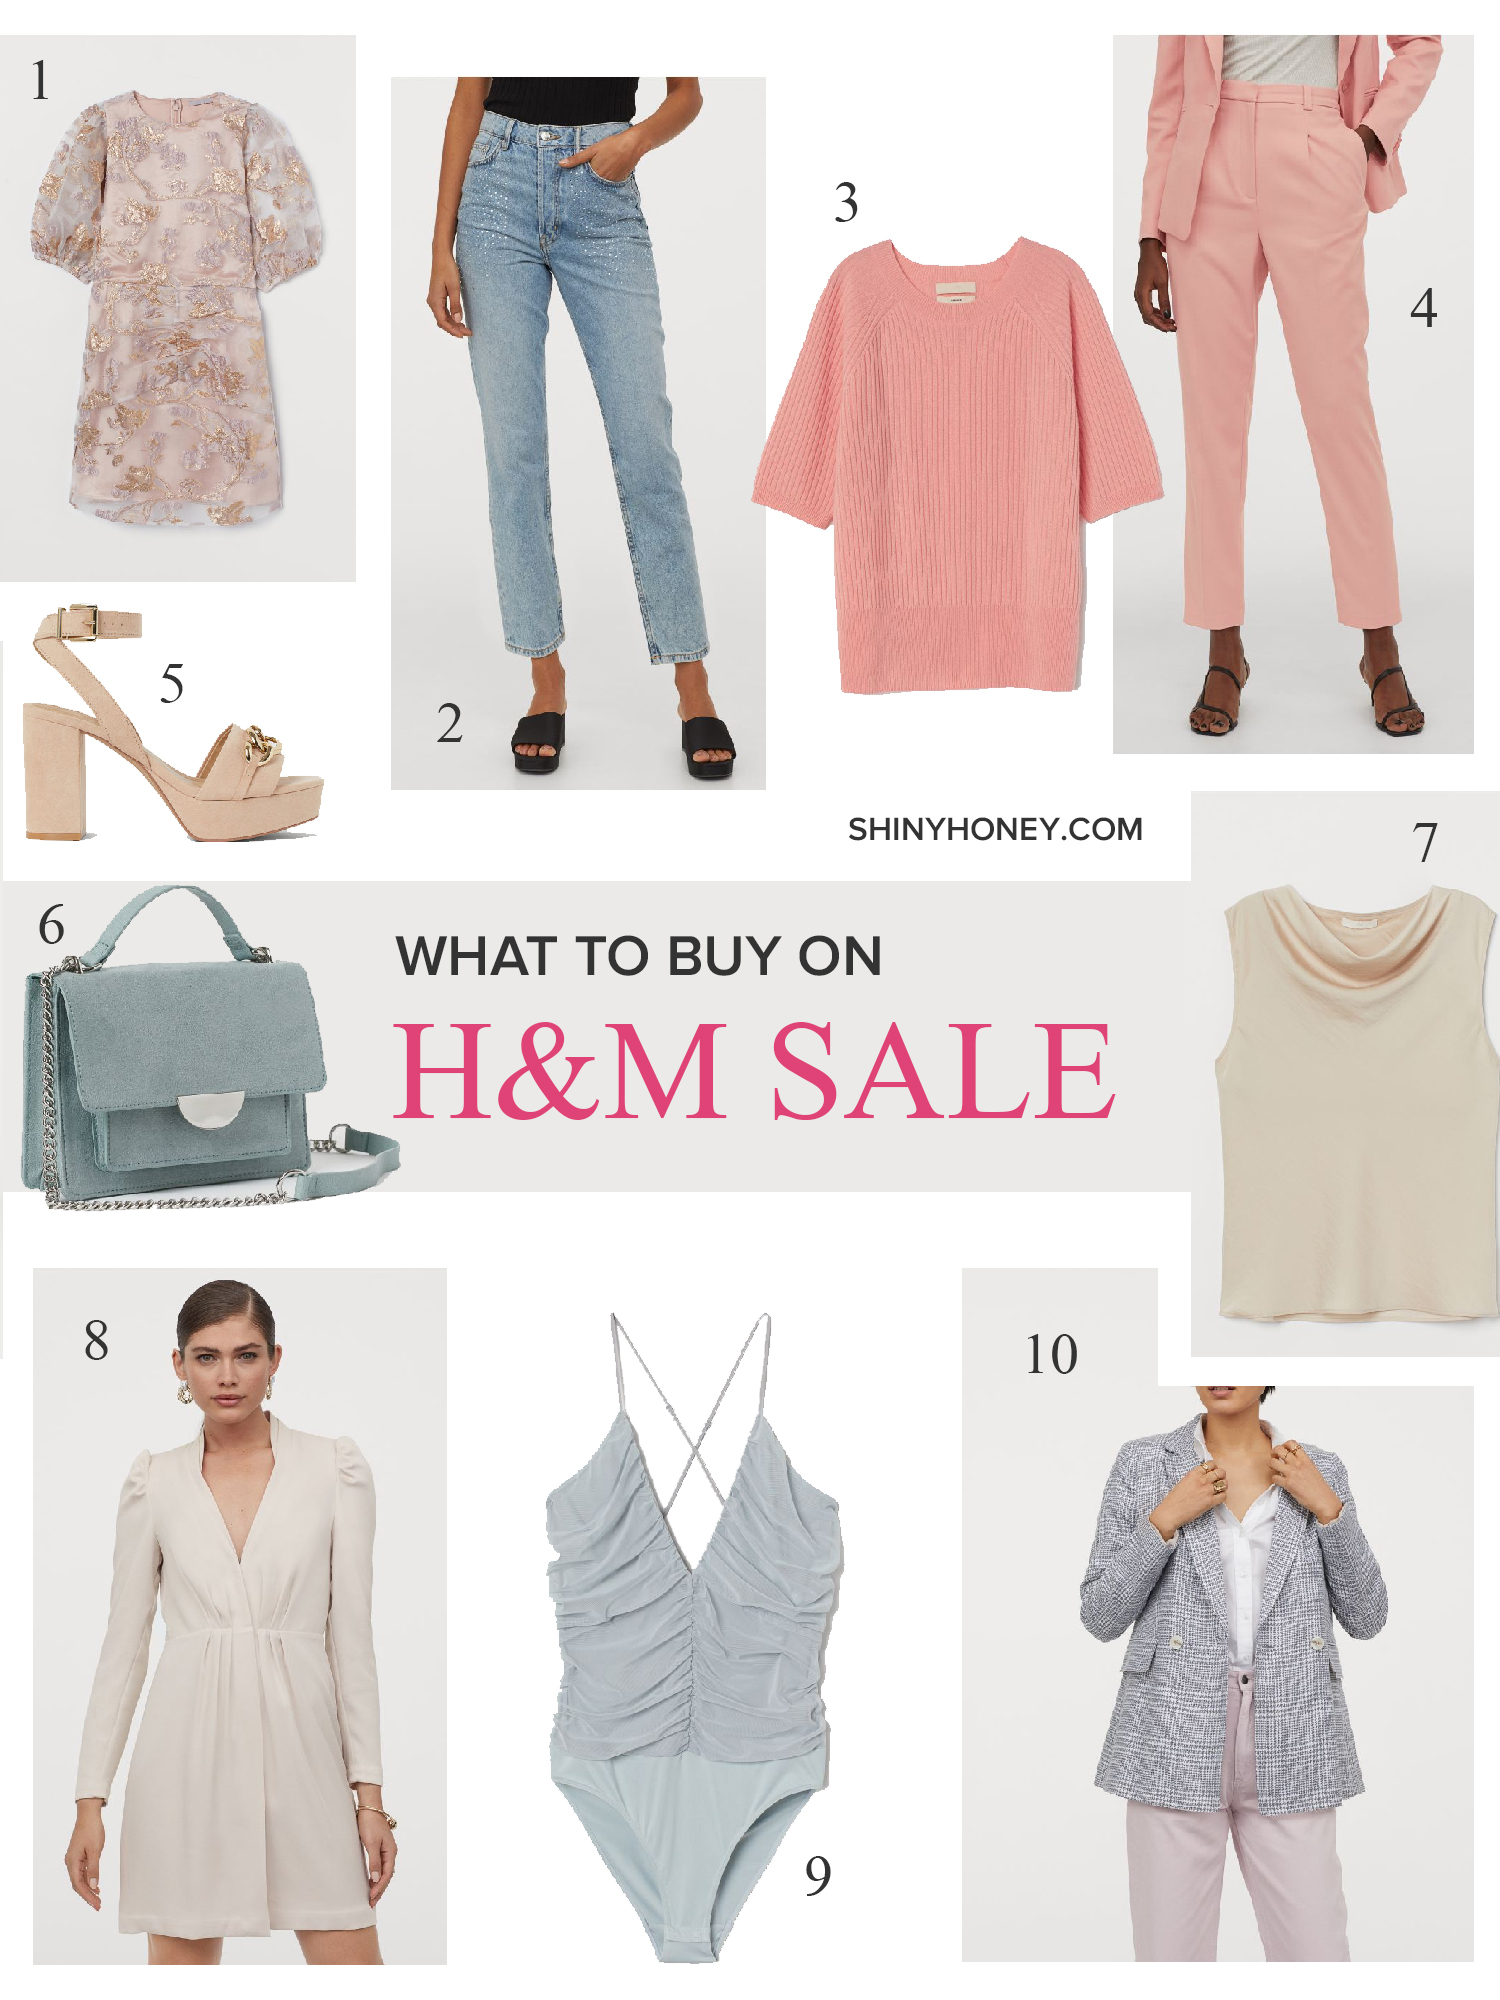 What To Buy on H&M Sale by Tamara Bellis